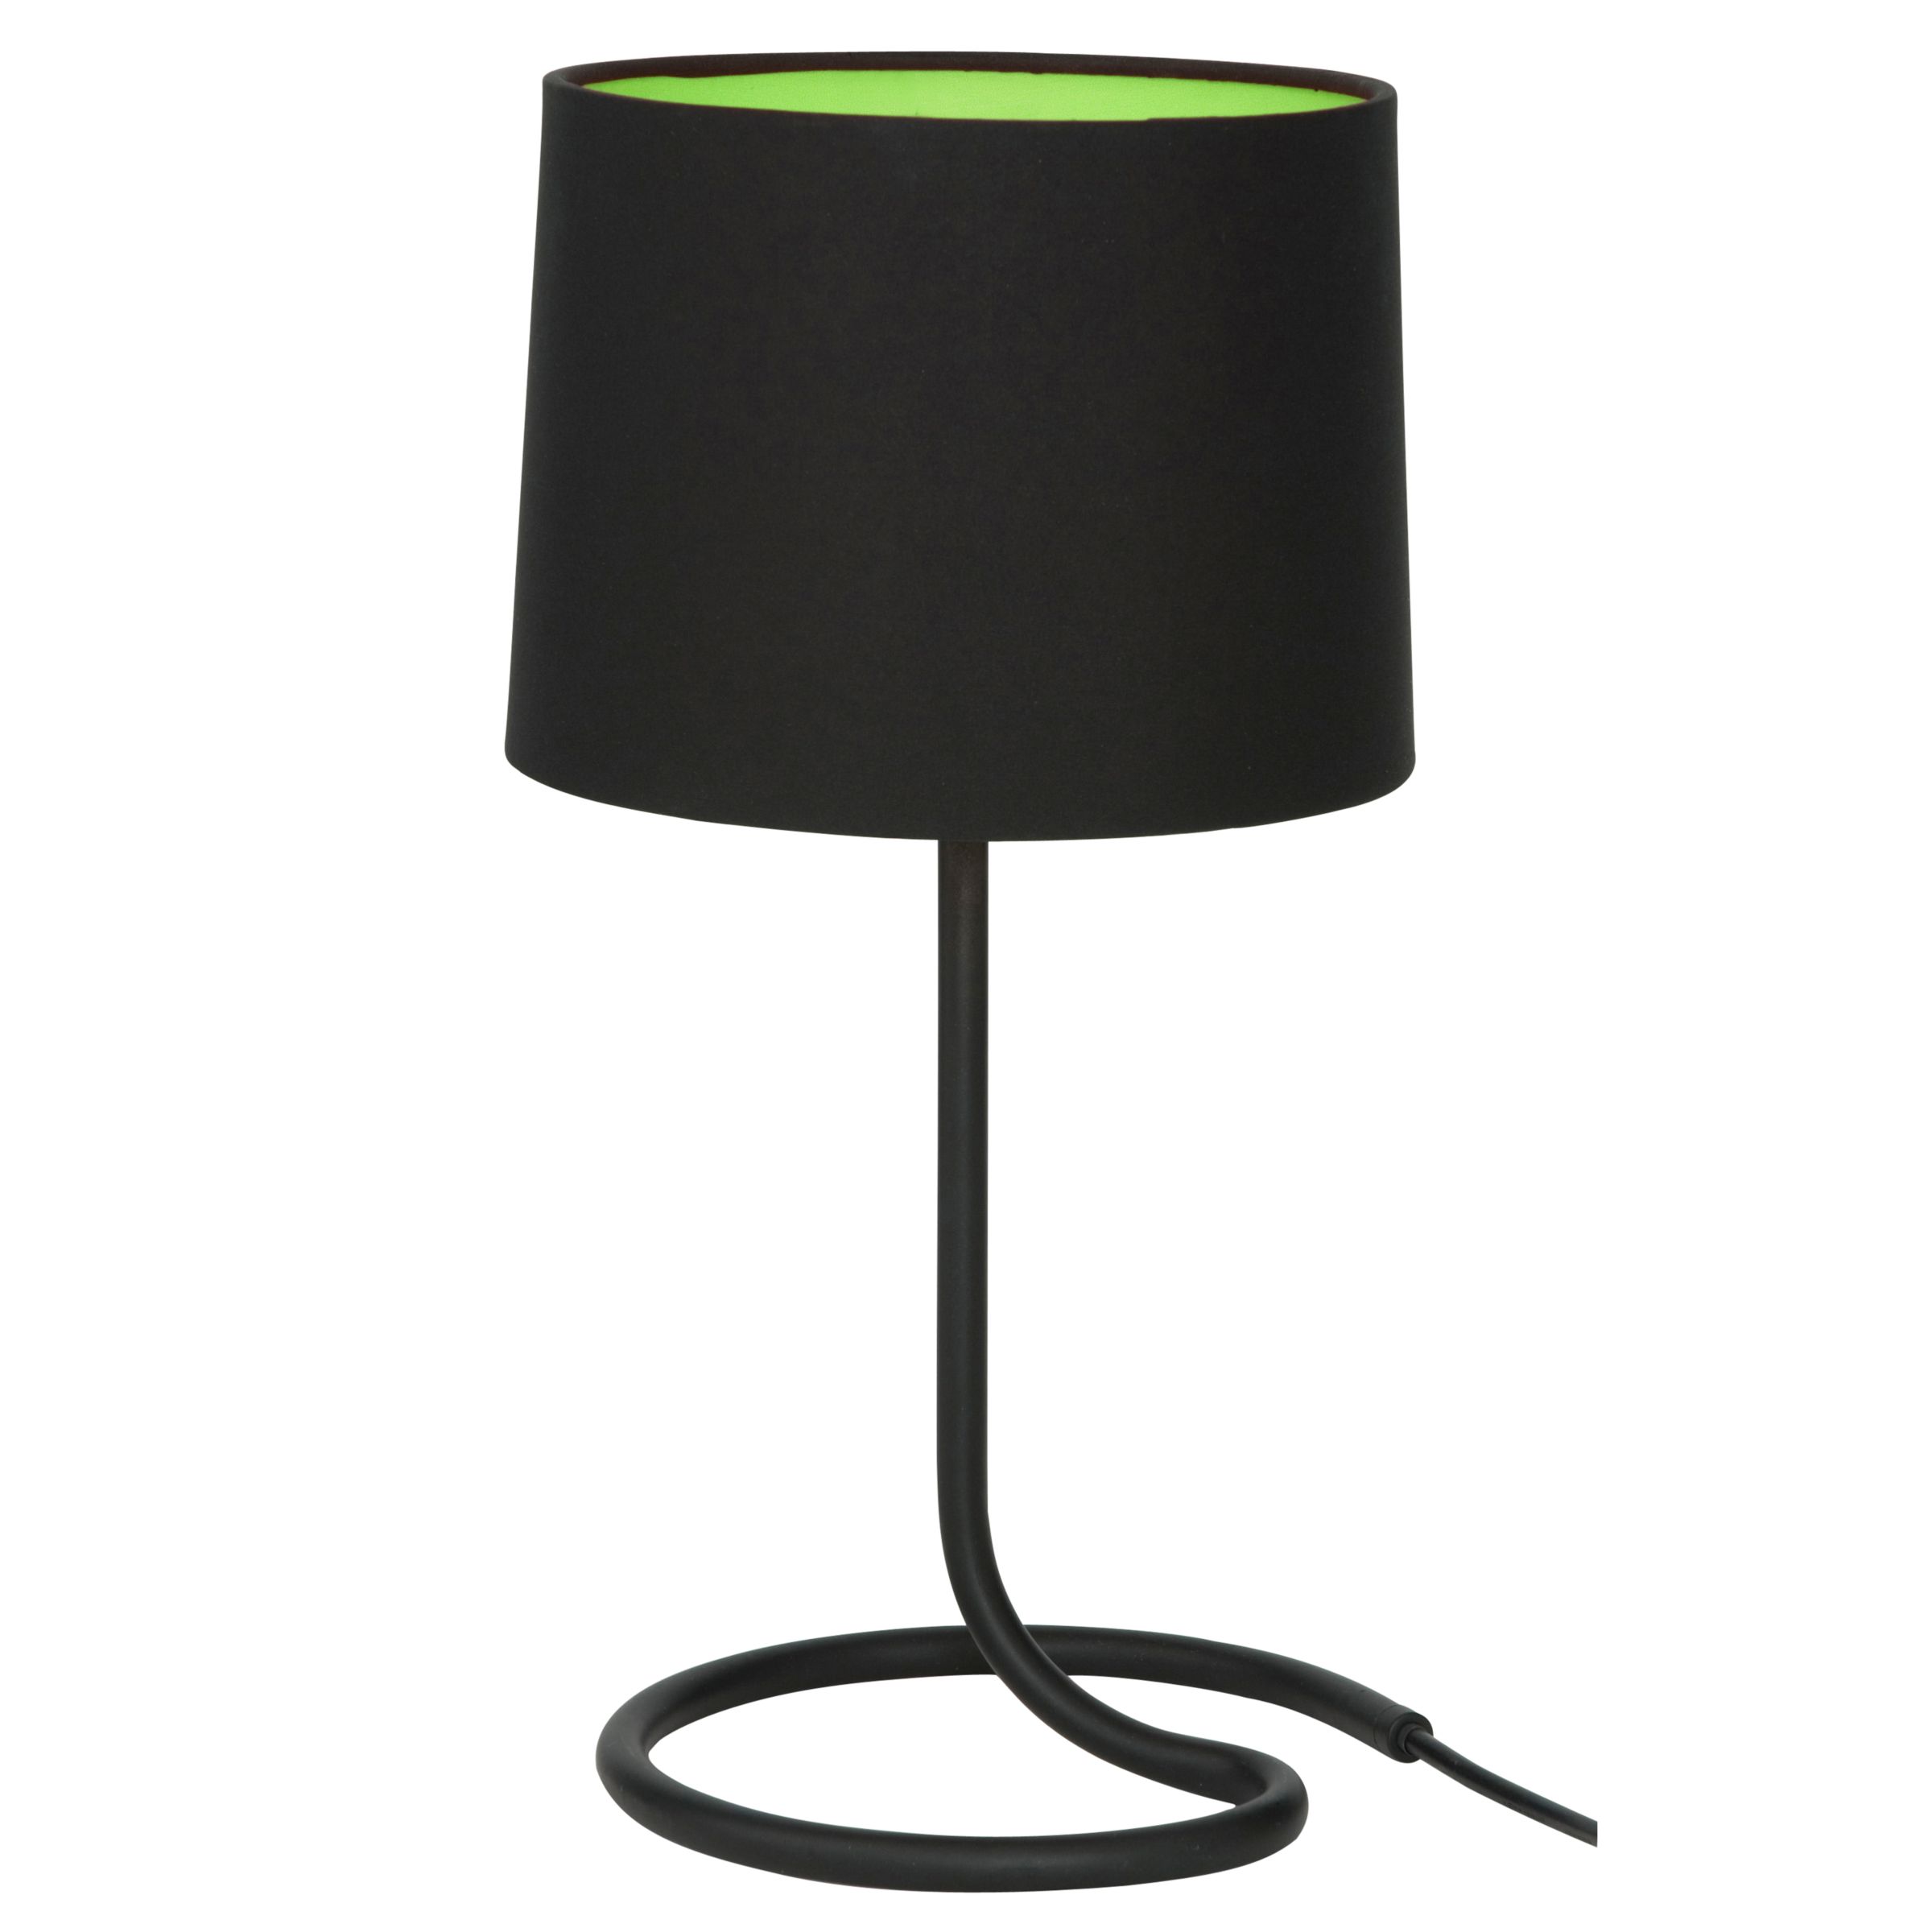 Hollie Table Lamp, Green / Black